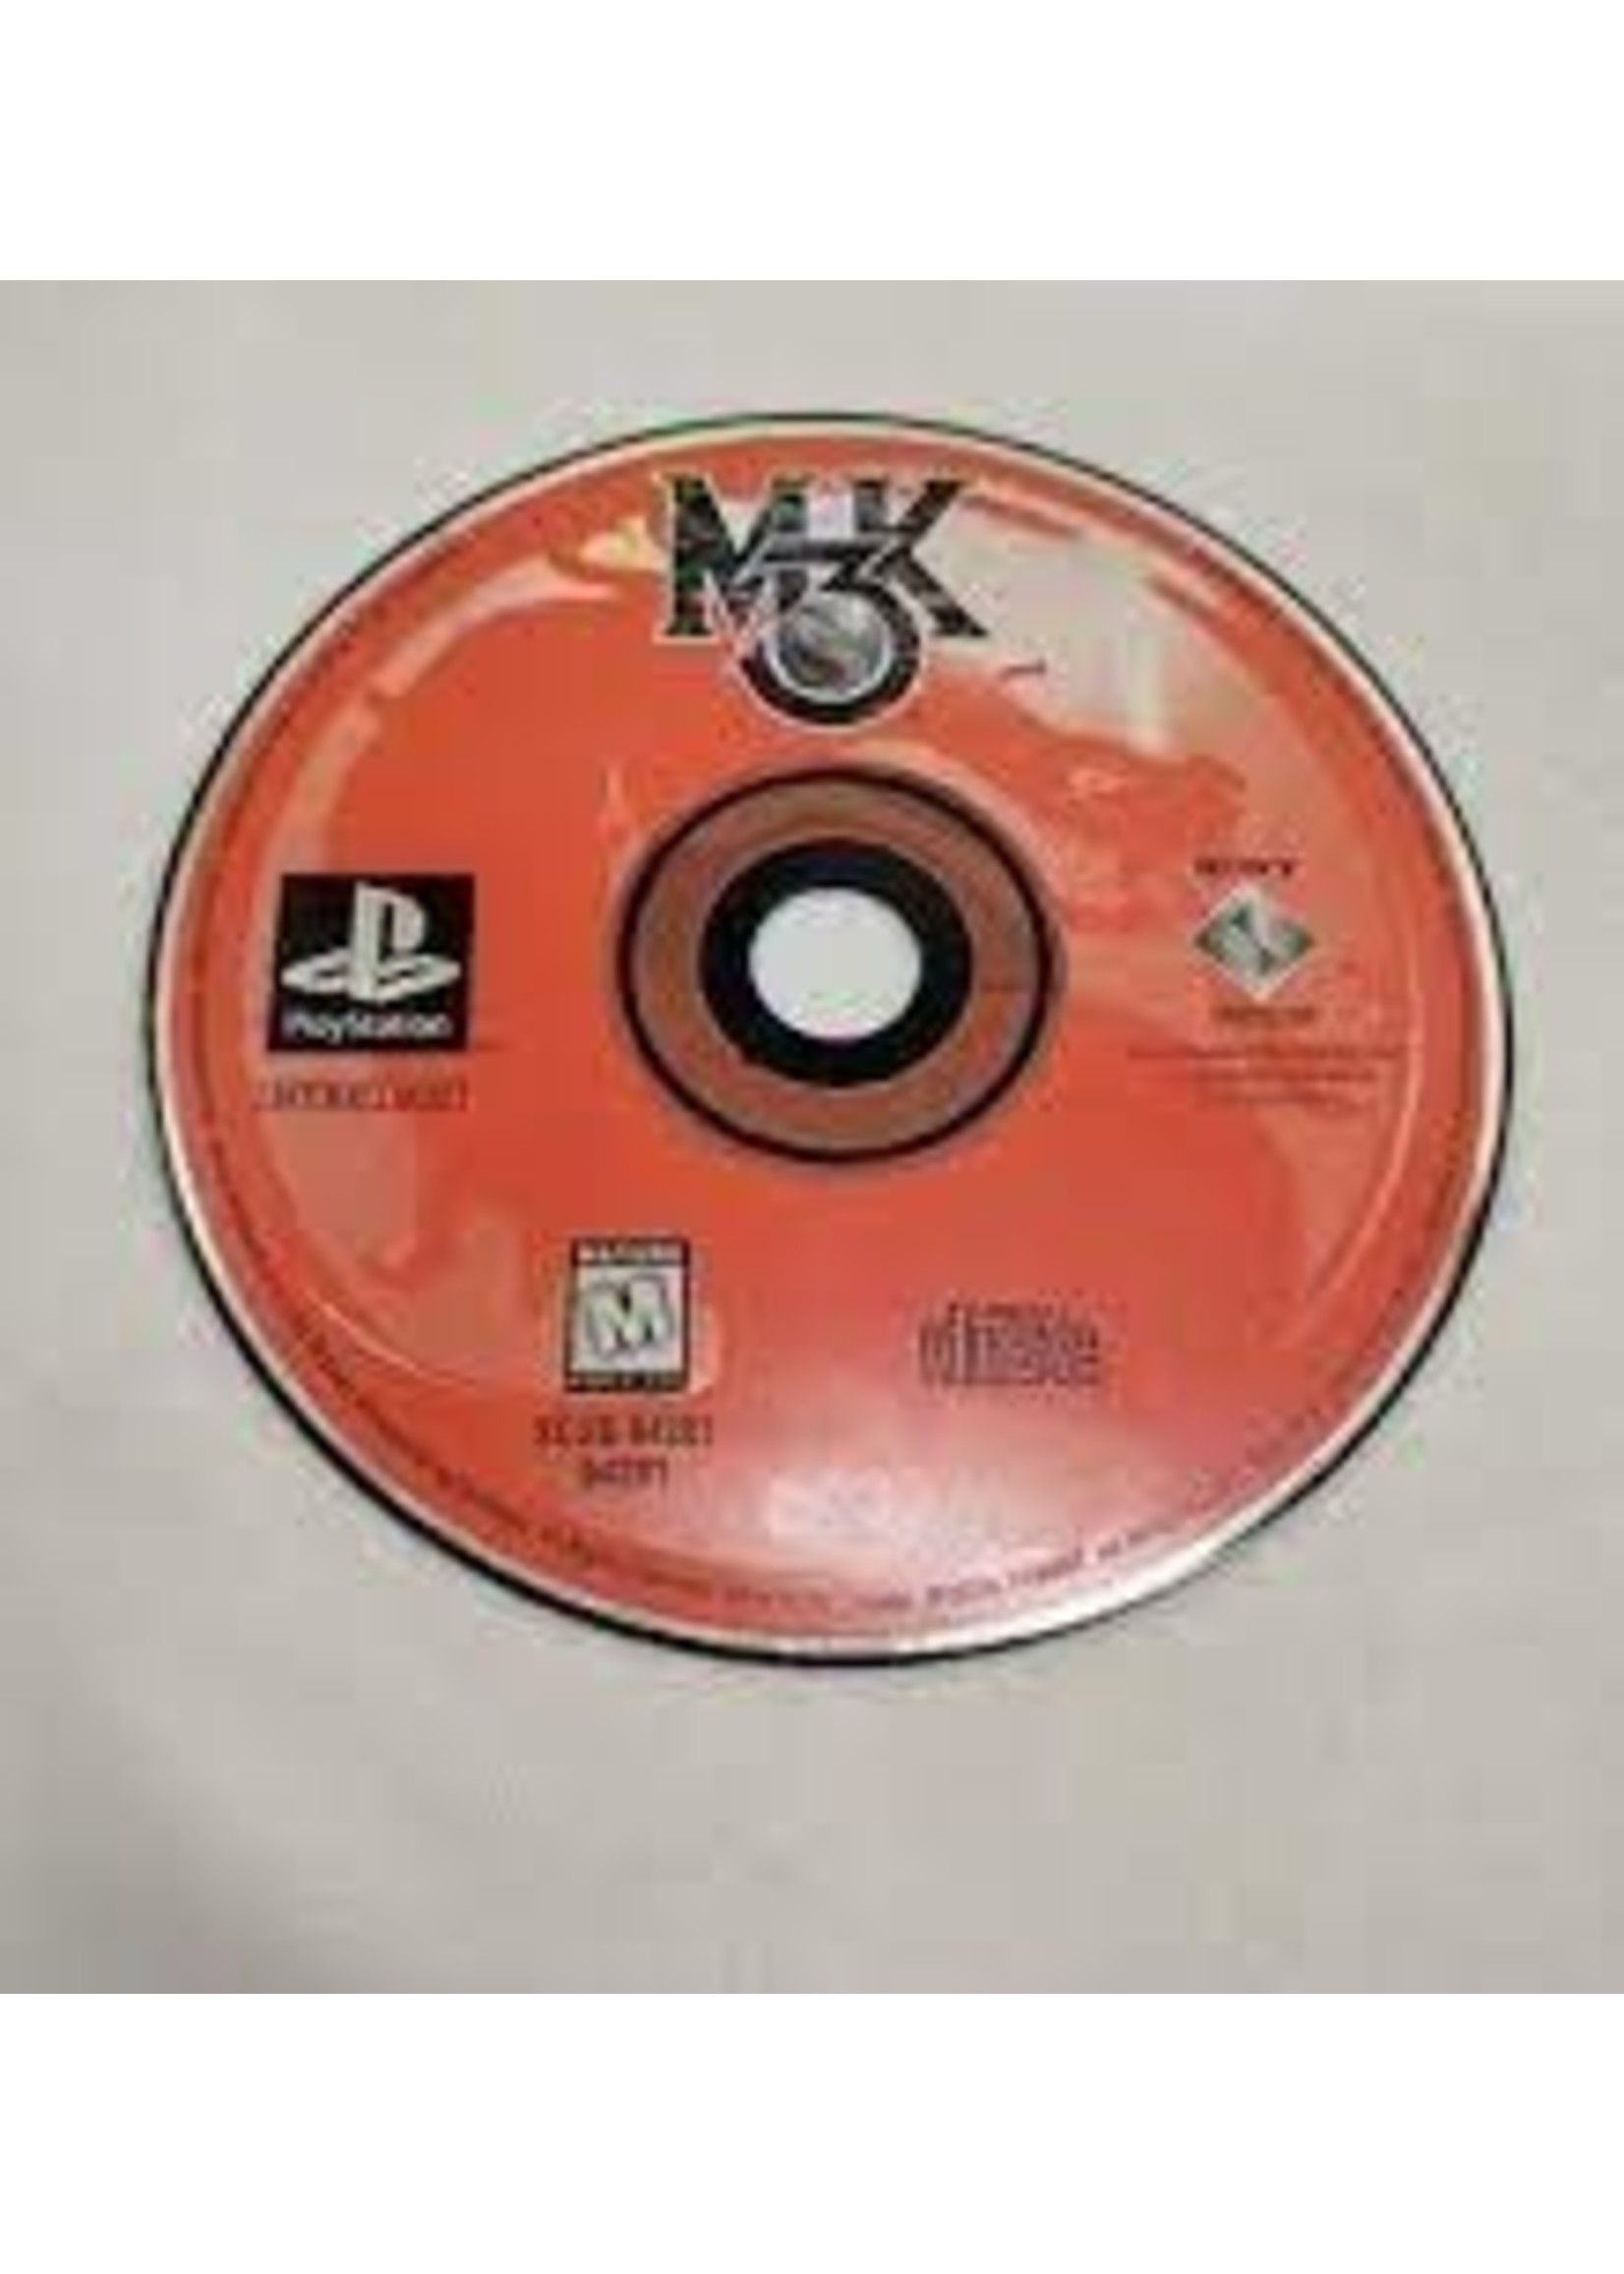 Sony Playstation 1 (PS1) Mortal Kombat 3 - Print